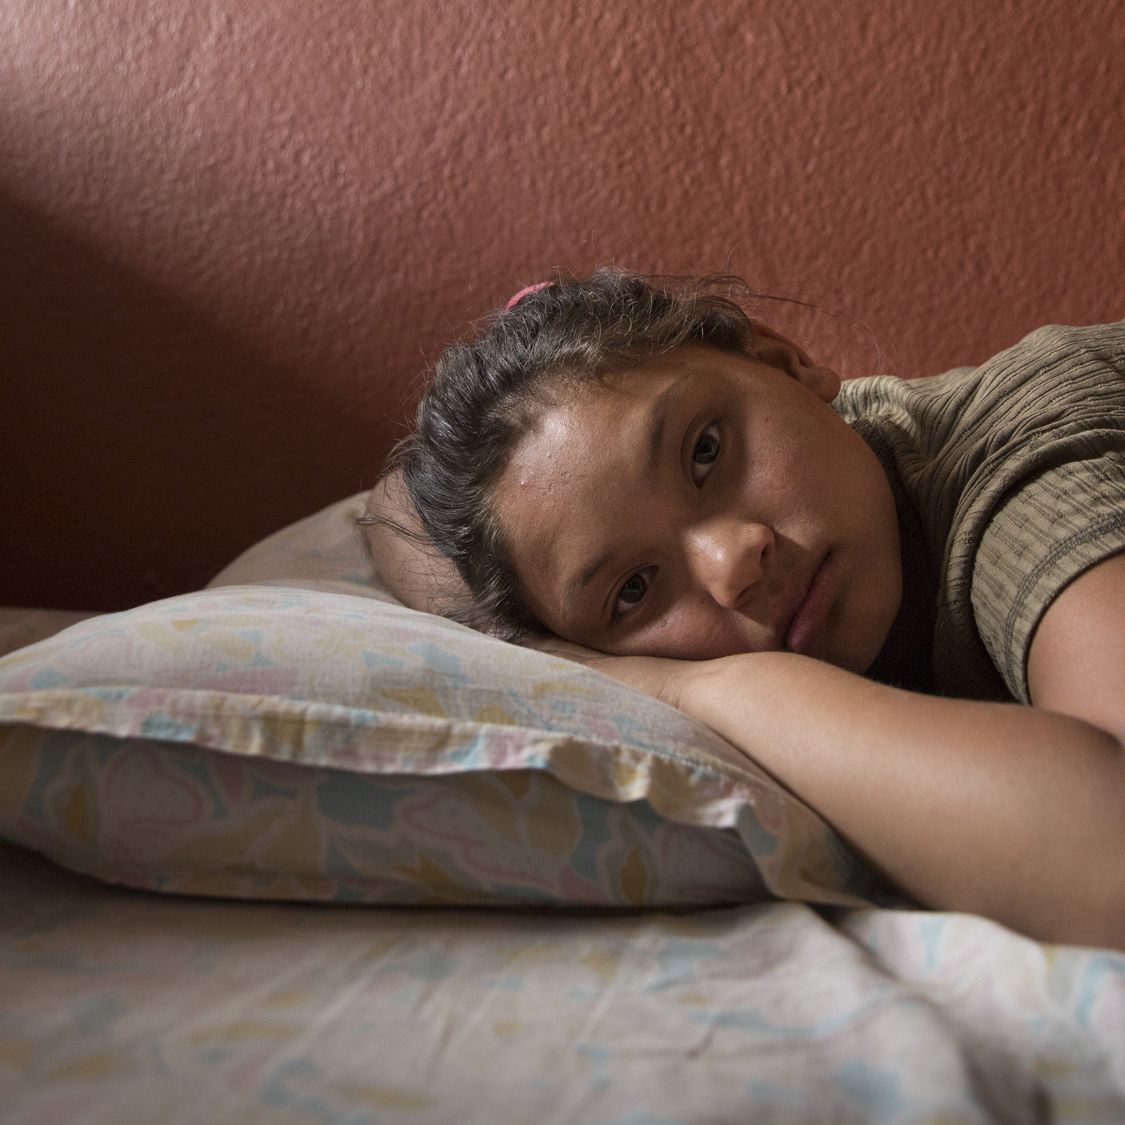 Negro Man Nepal Girl Sex - Nepal quake: One girl's remarkable recovery | CNN